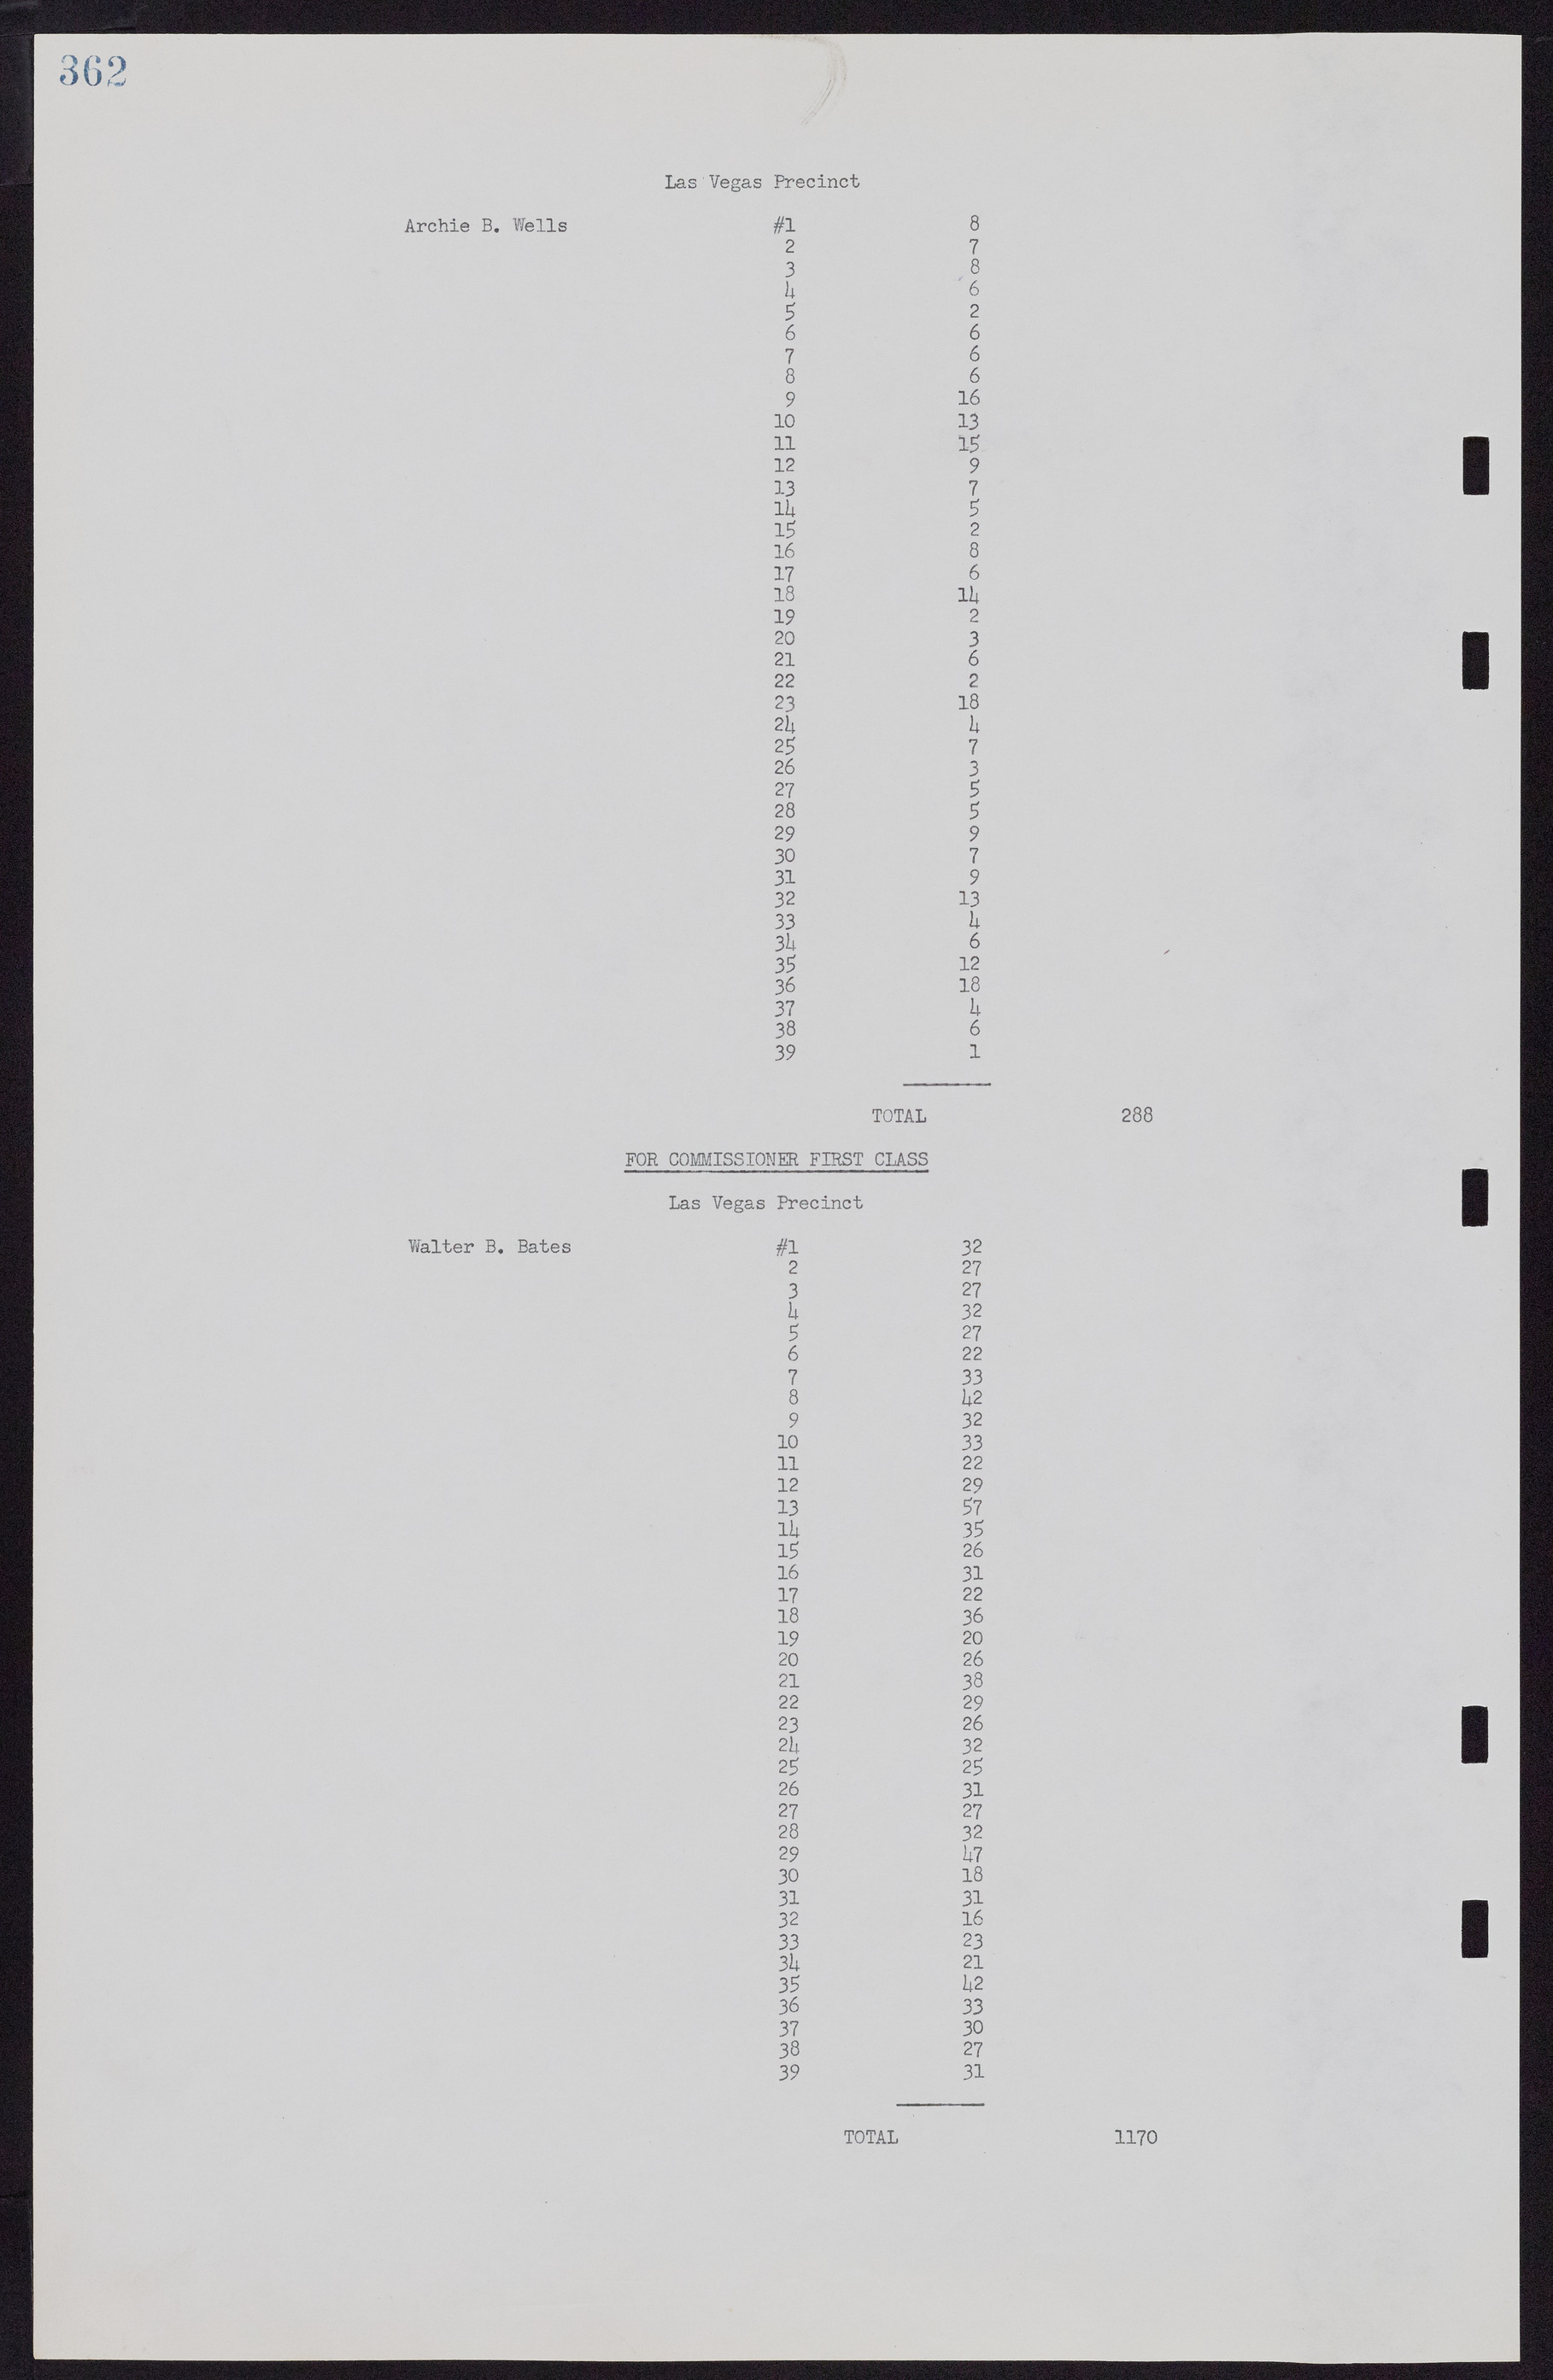 Las Vegas City Commission Minutes, November 7, 1949 to May 21, 1952, lvc000007-374